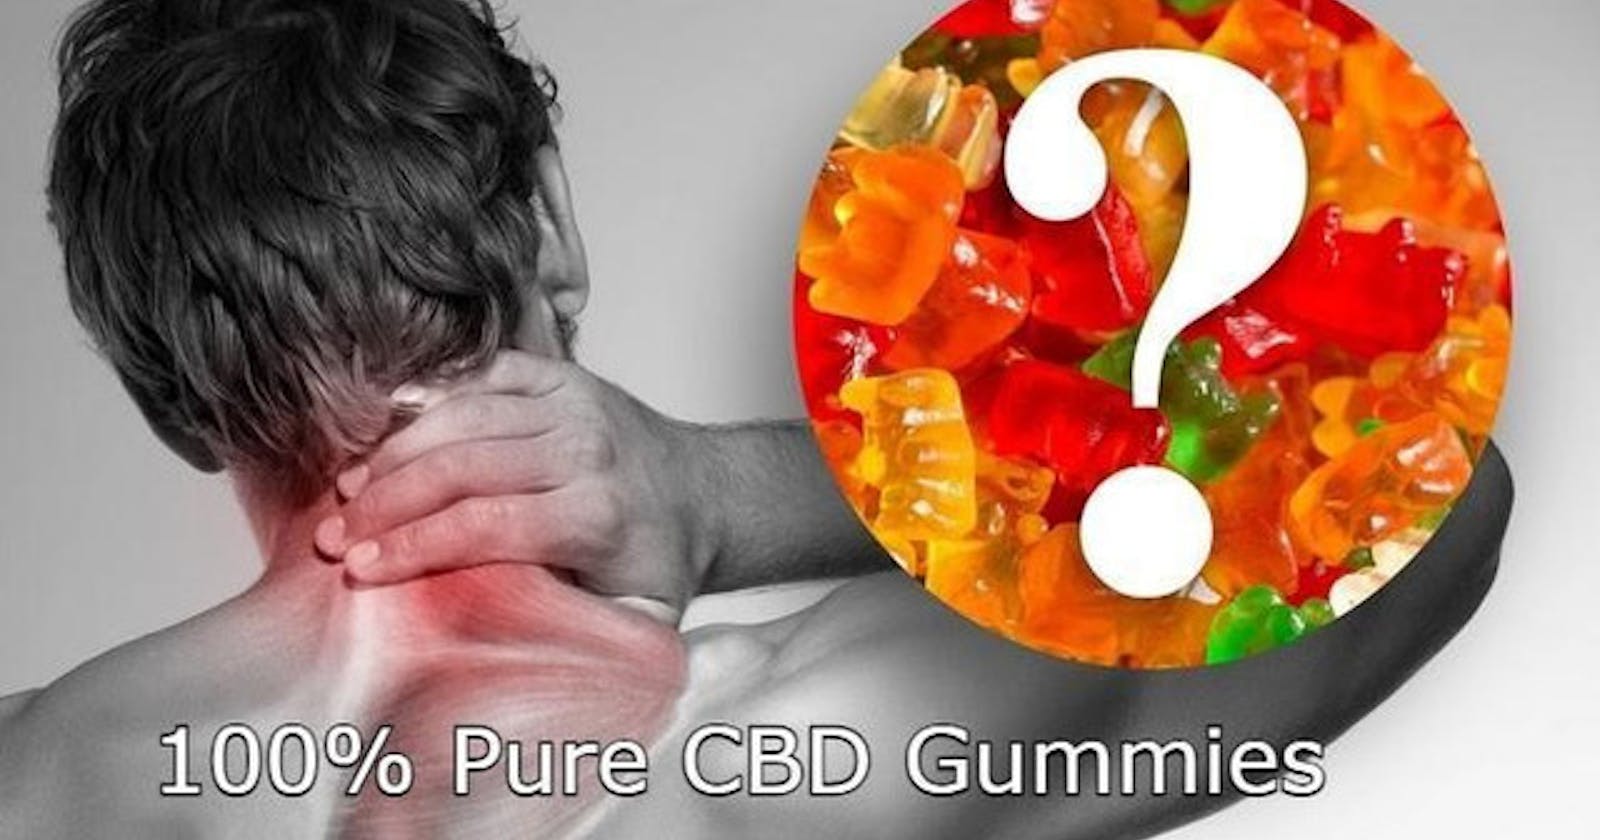 Life Boost CBD Gummies Reviews - Warning! Fake Or Real?